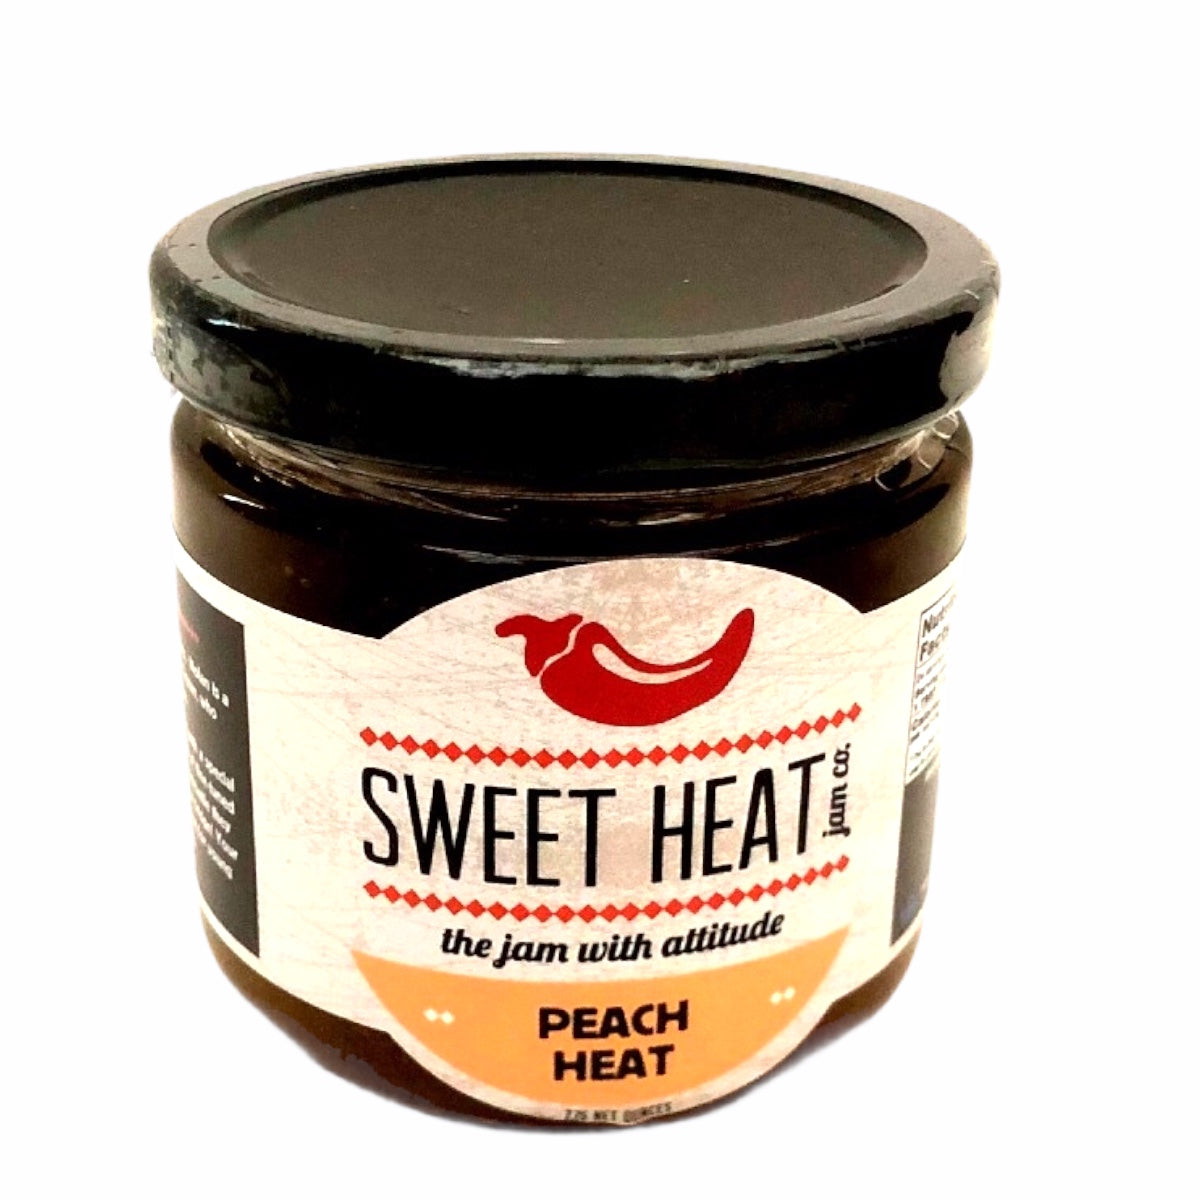 sweet heat jam peach